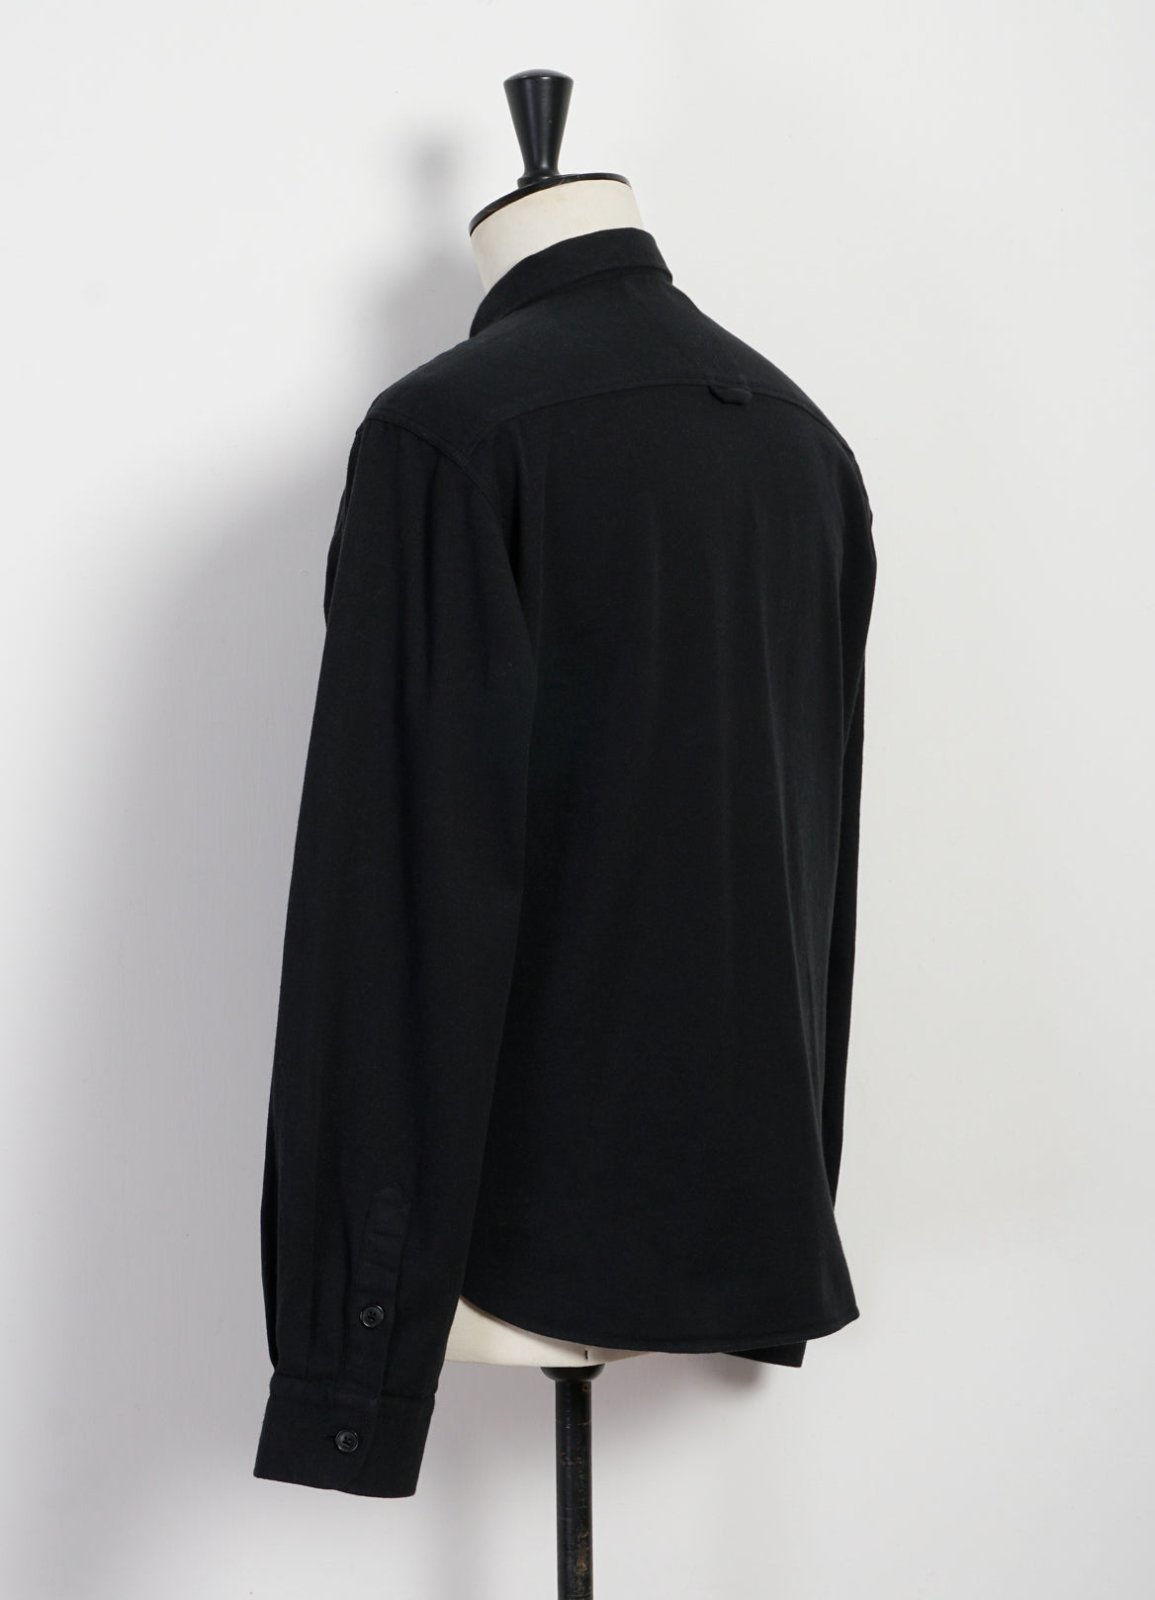 HANSEN GARMENTS - RUBEN | Casual Over Shirt | Black - HANSEN Garments